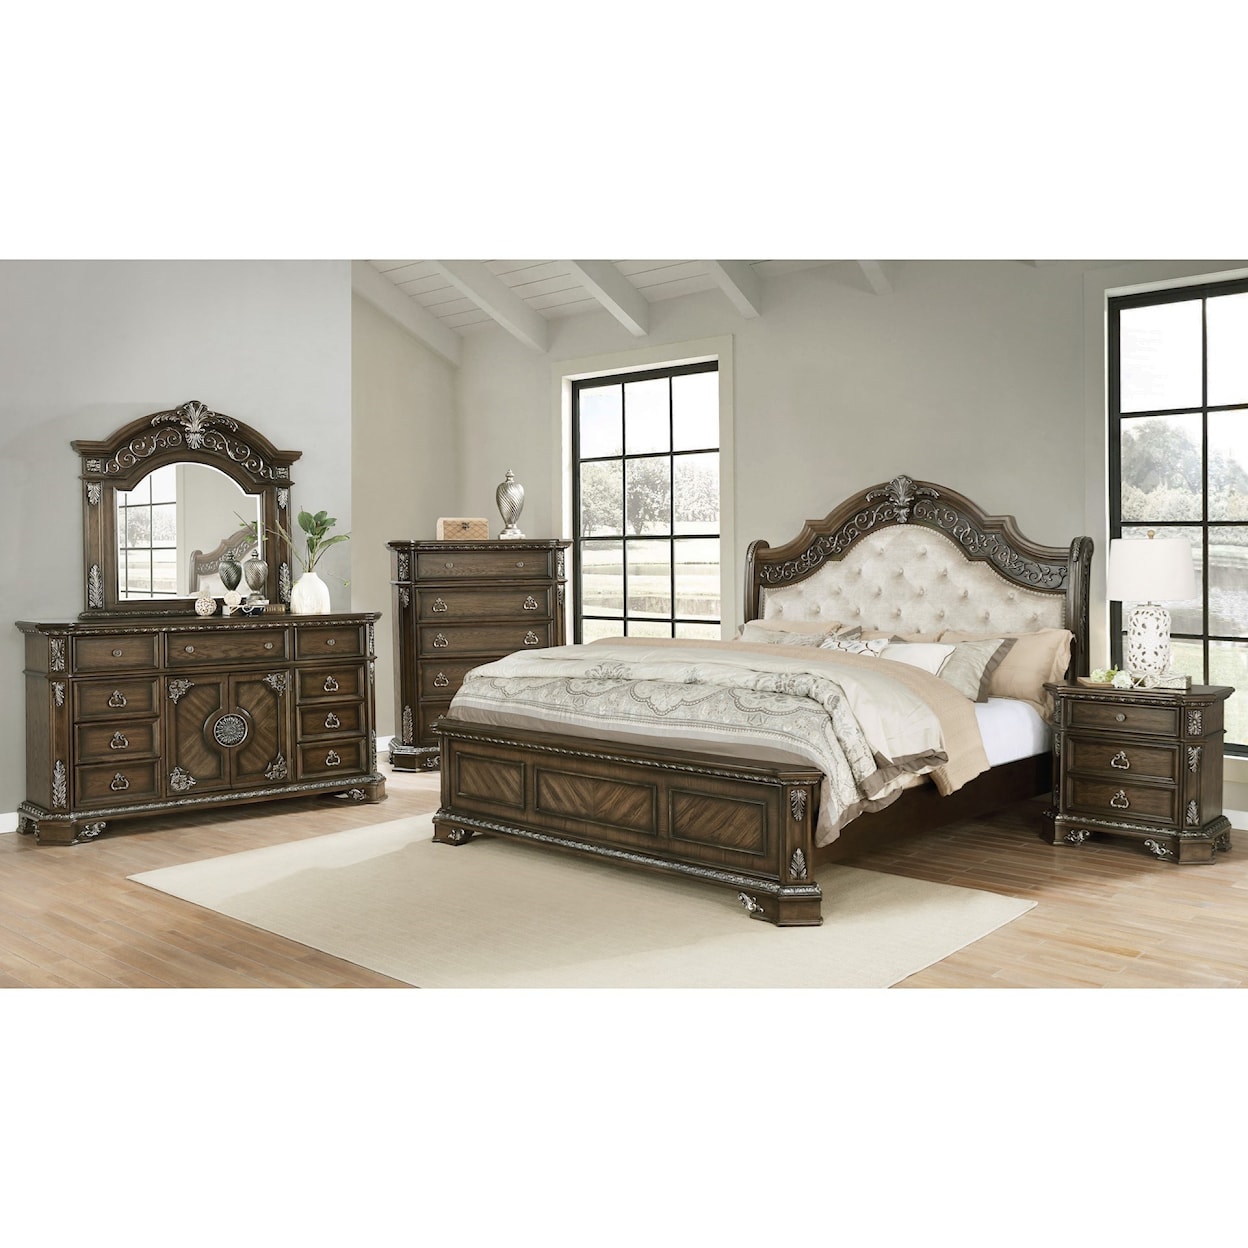 Avalon Furniture B01920 King Bedroom Group